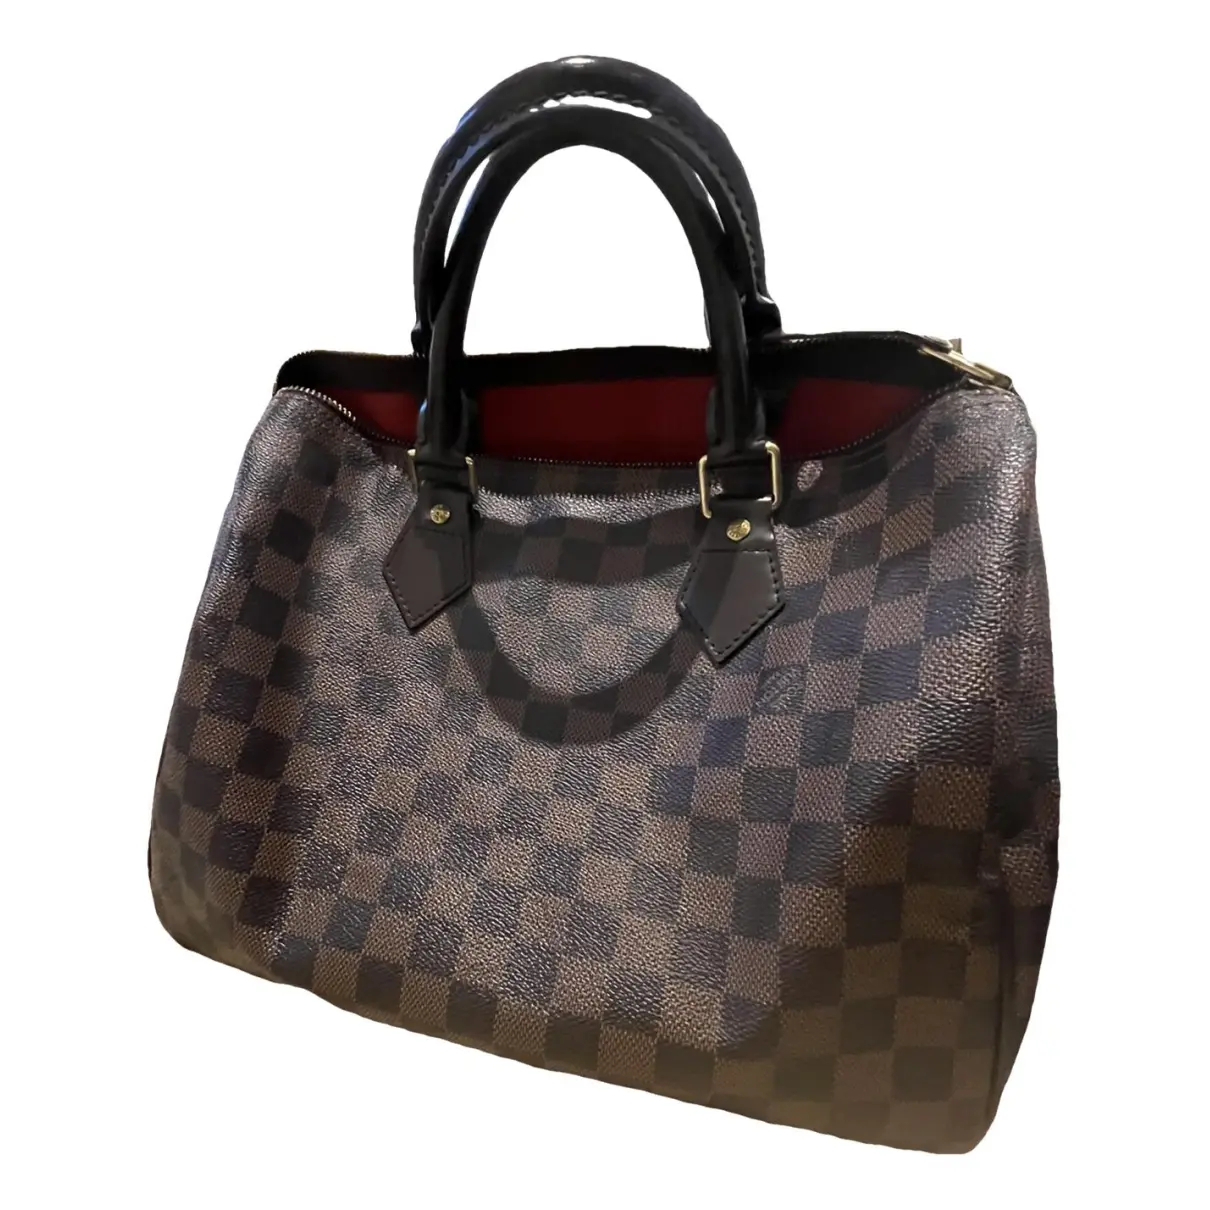 Speedy patent leather handbag